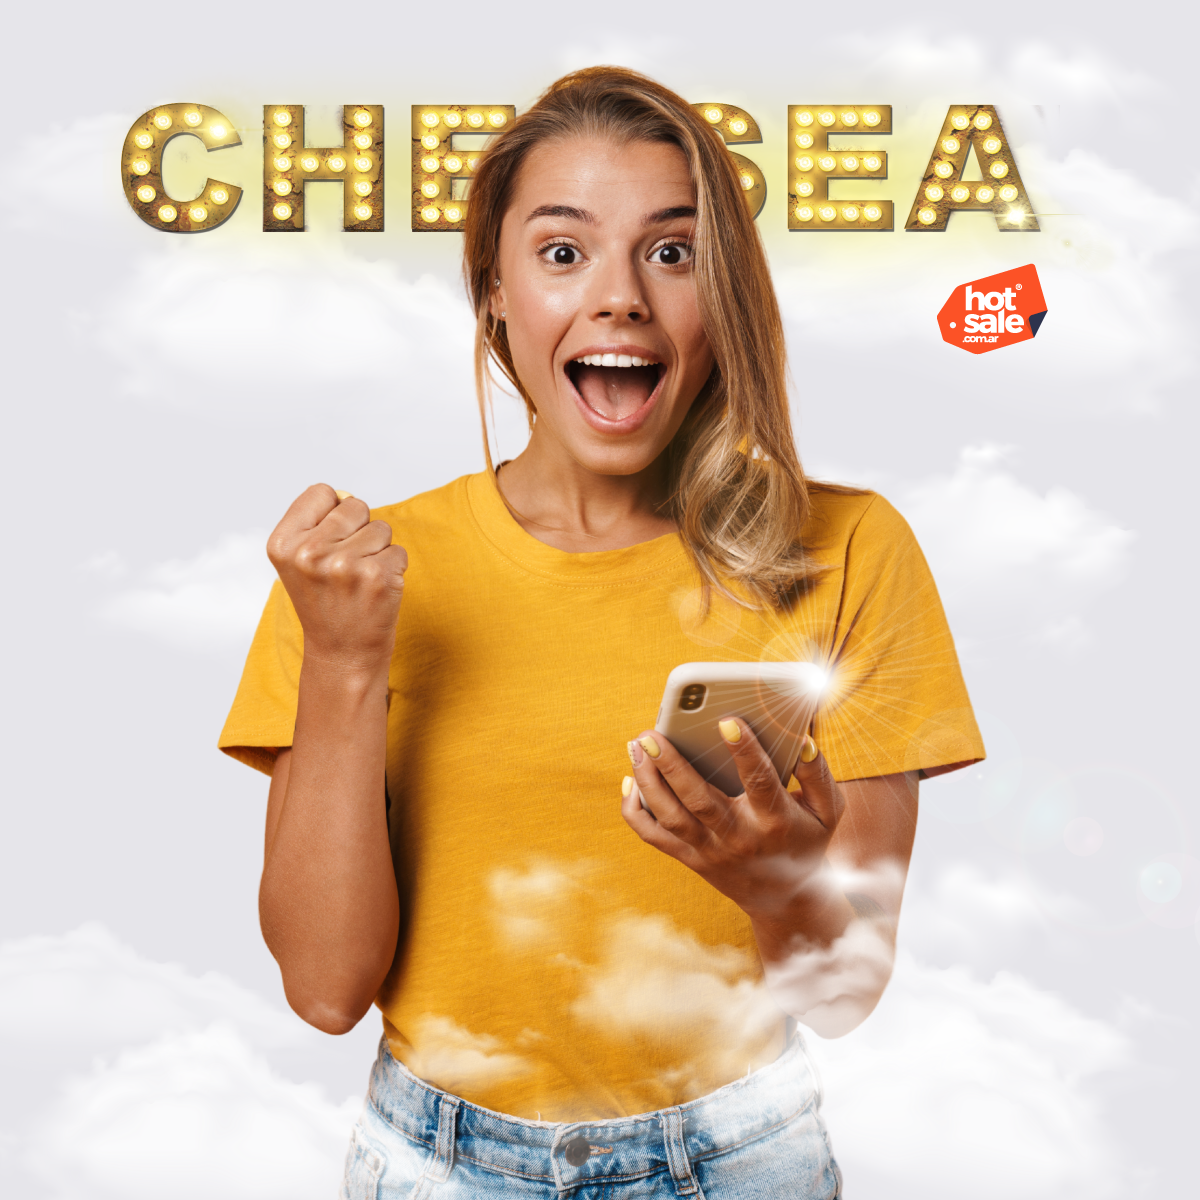 chelsea Hot Sale